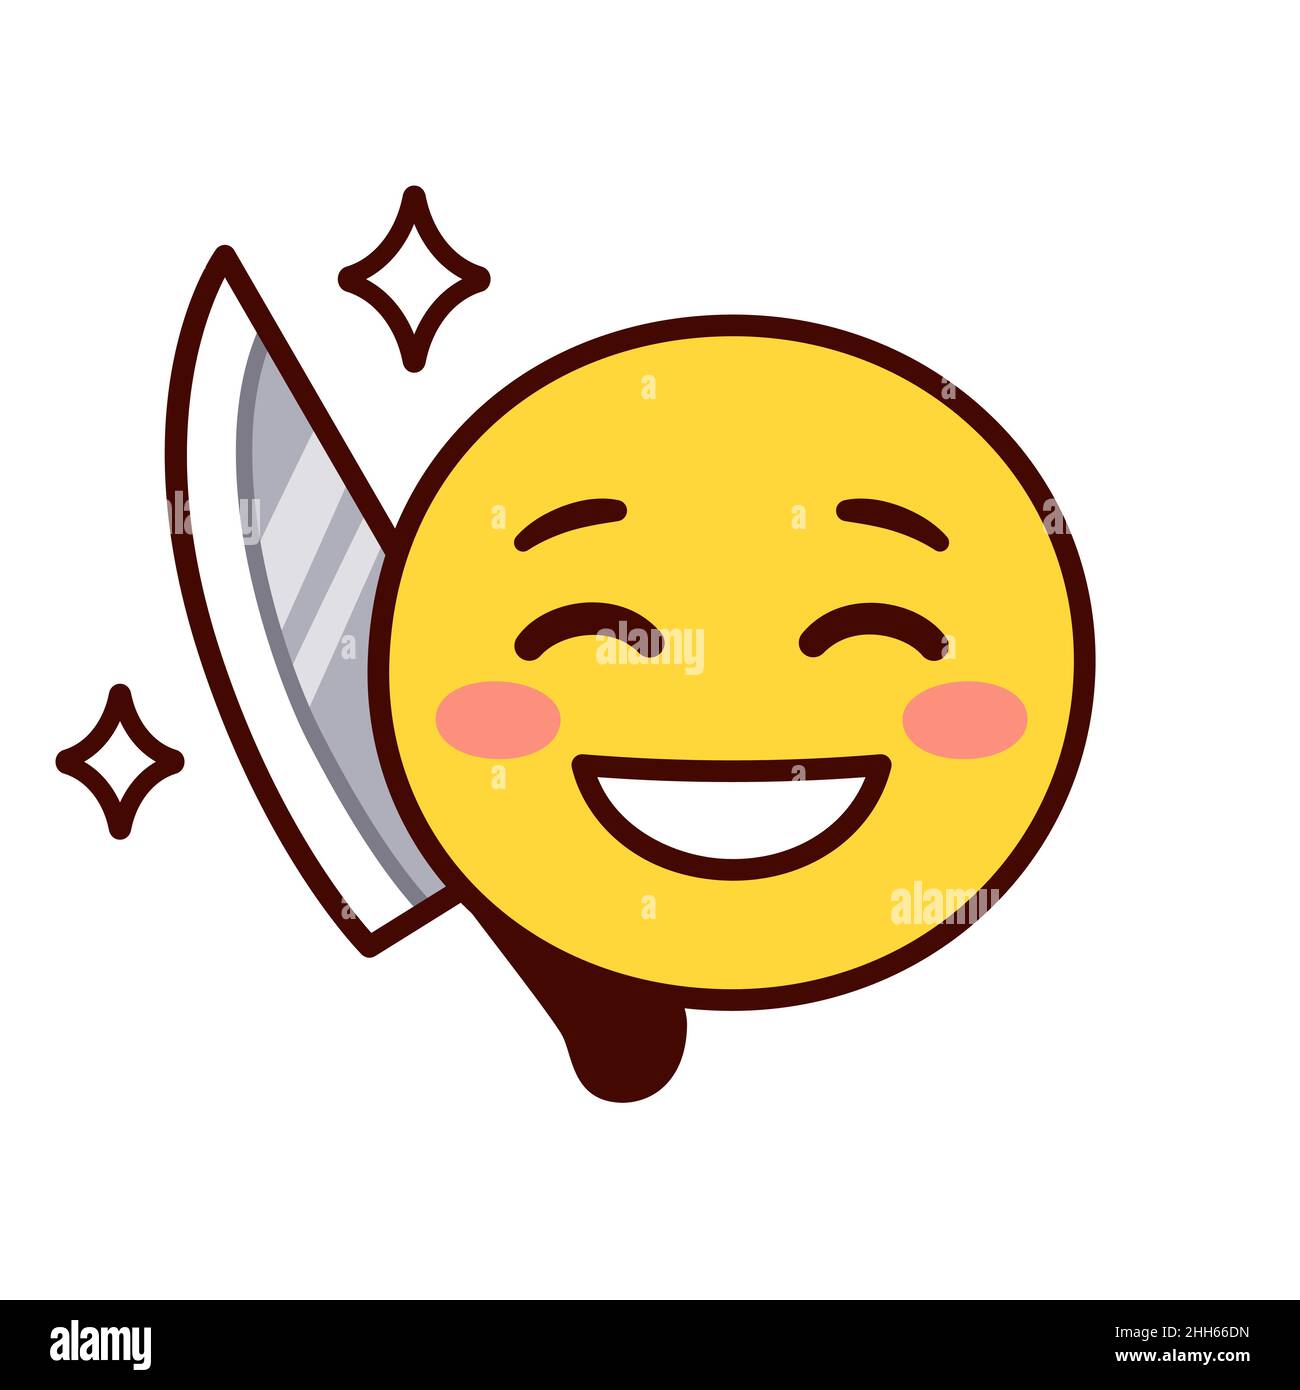 笑里藏刀 espressione cinese: Un coltello nascosto dietro un sorriso. Sorridente emoji nascondendo il coltello dietro la schiena. Illustrazione Vettoriale